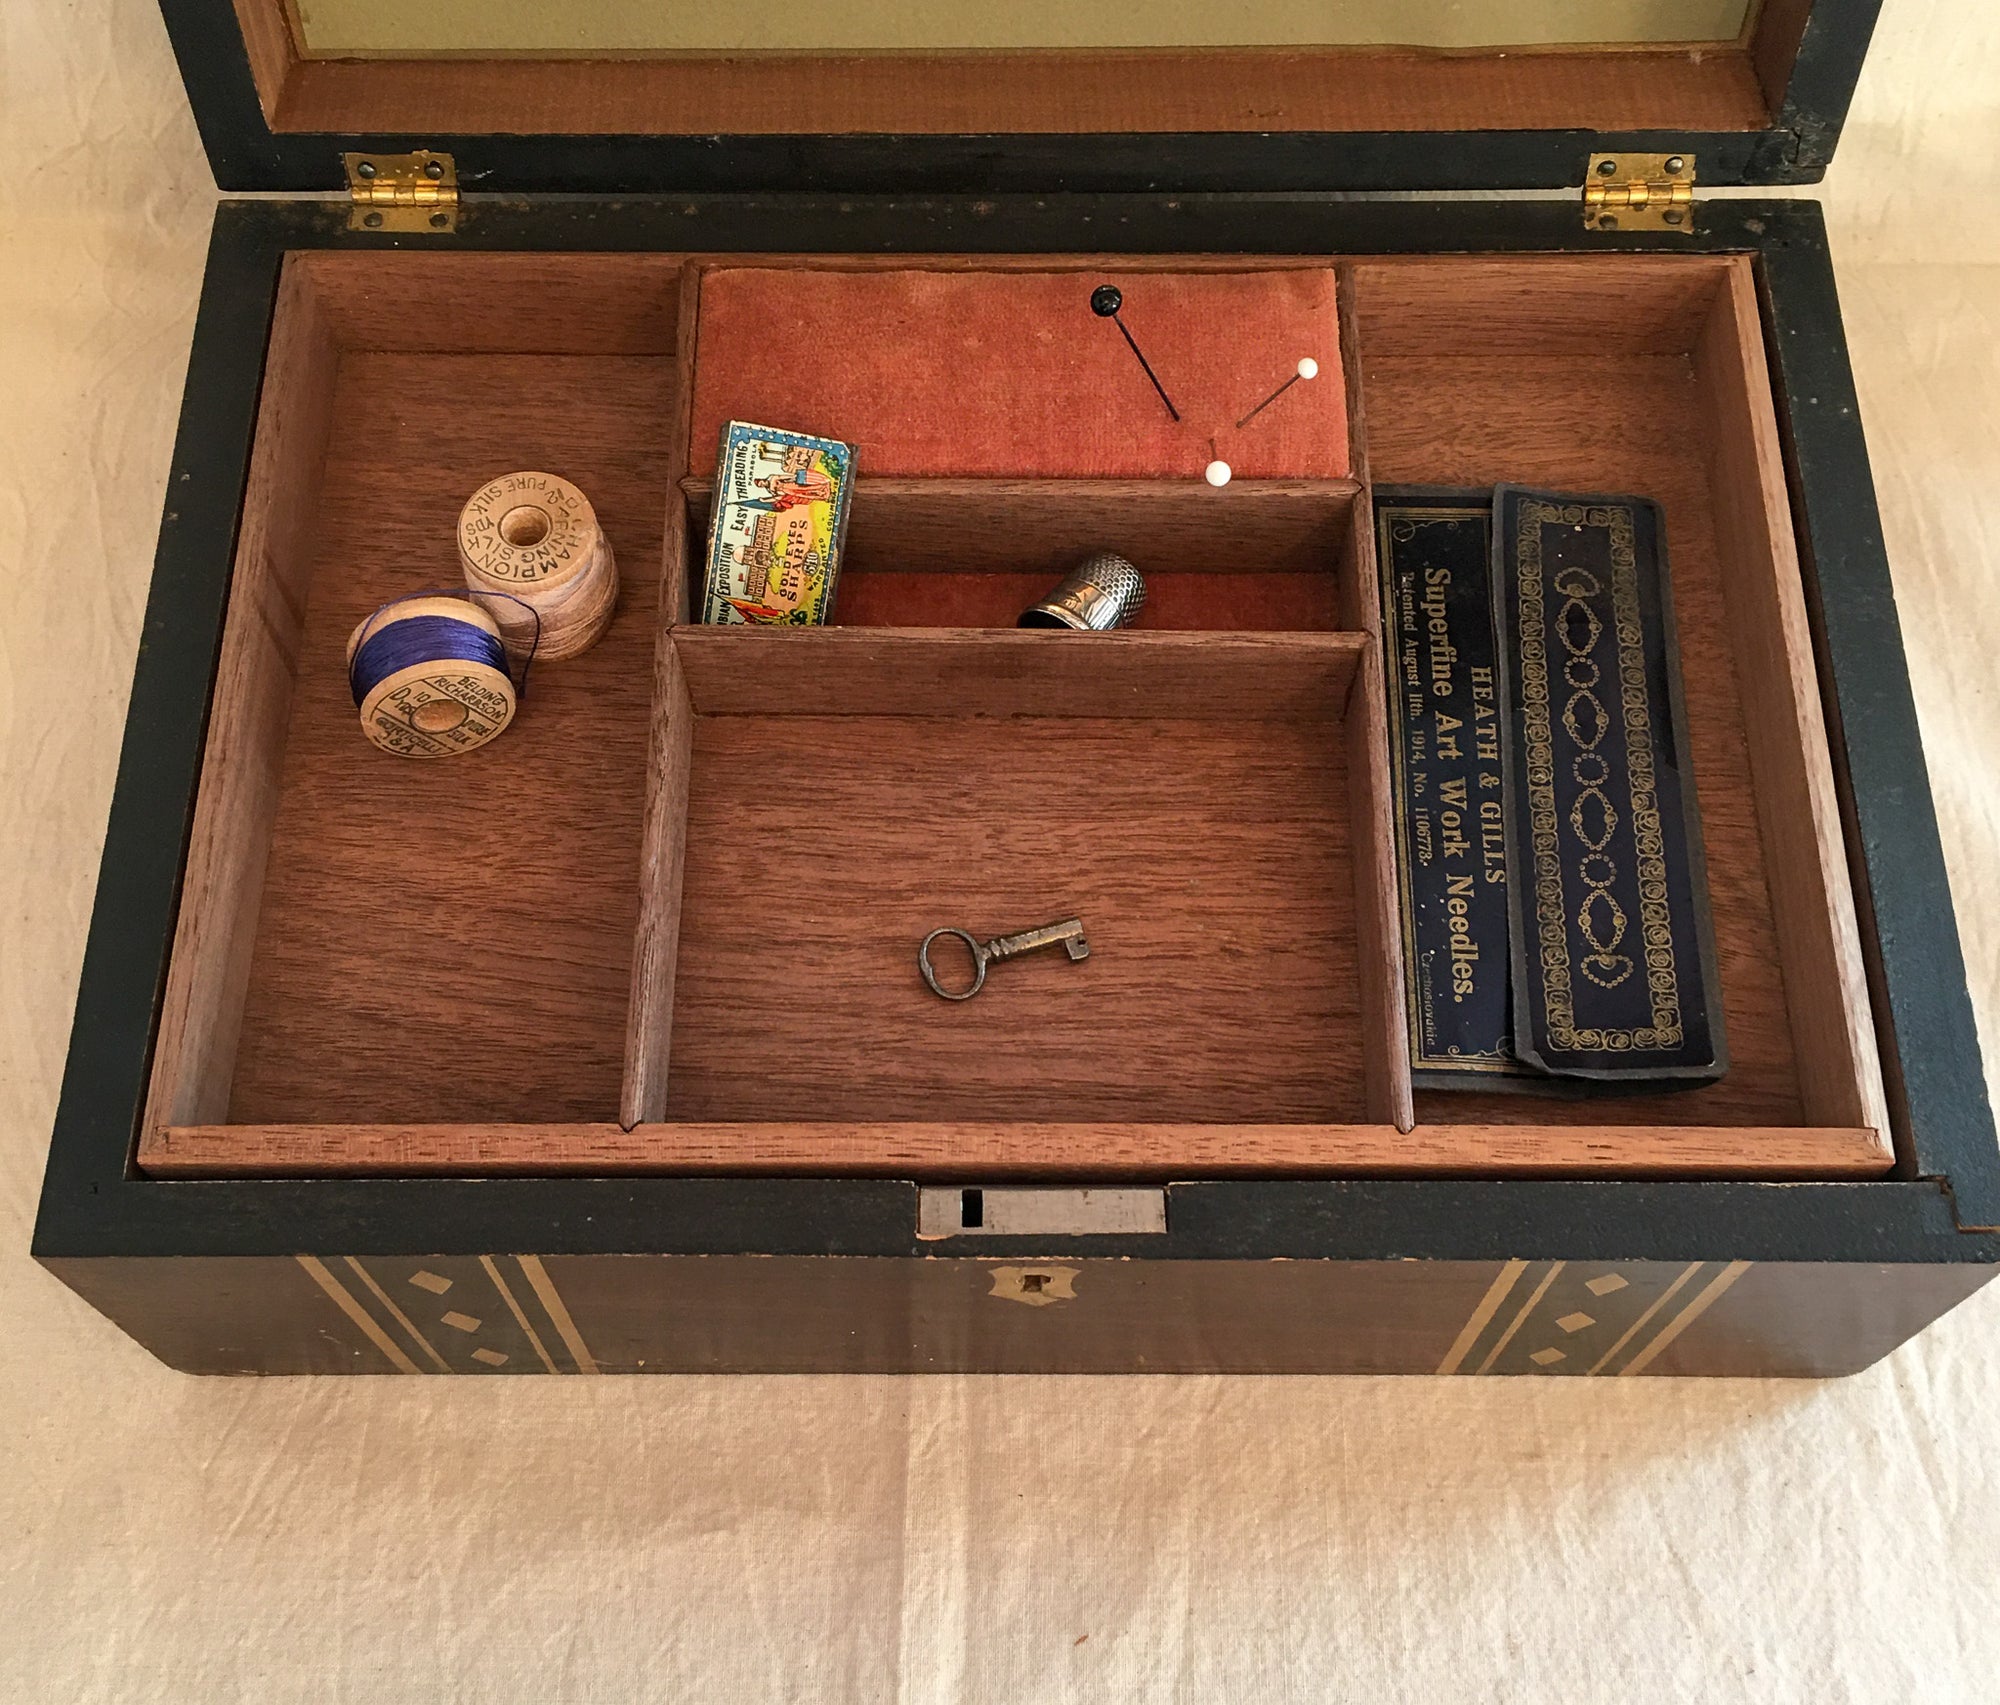 Art Deco Era Sewing Box with Working Lock